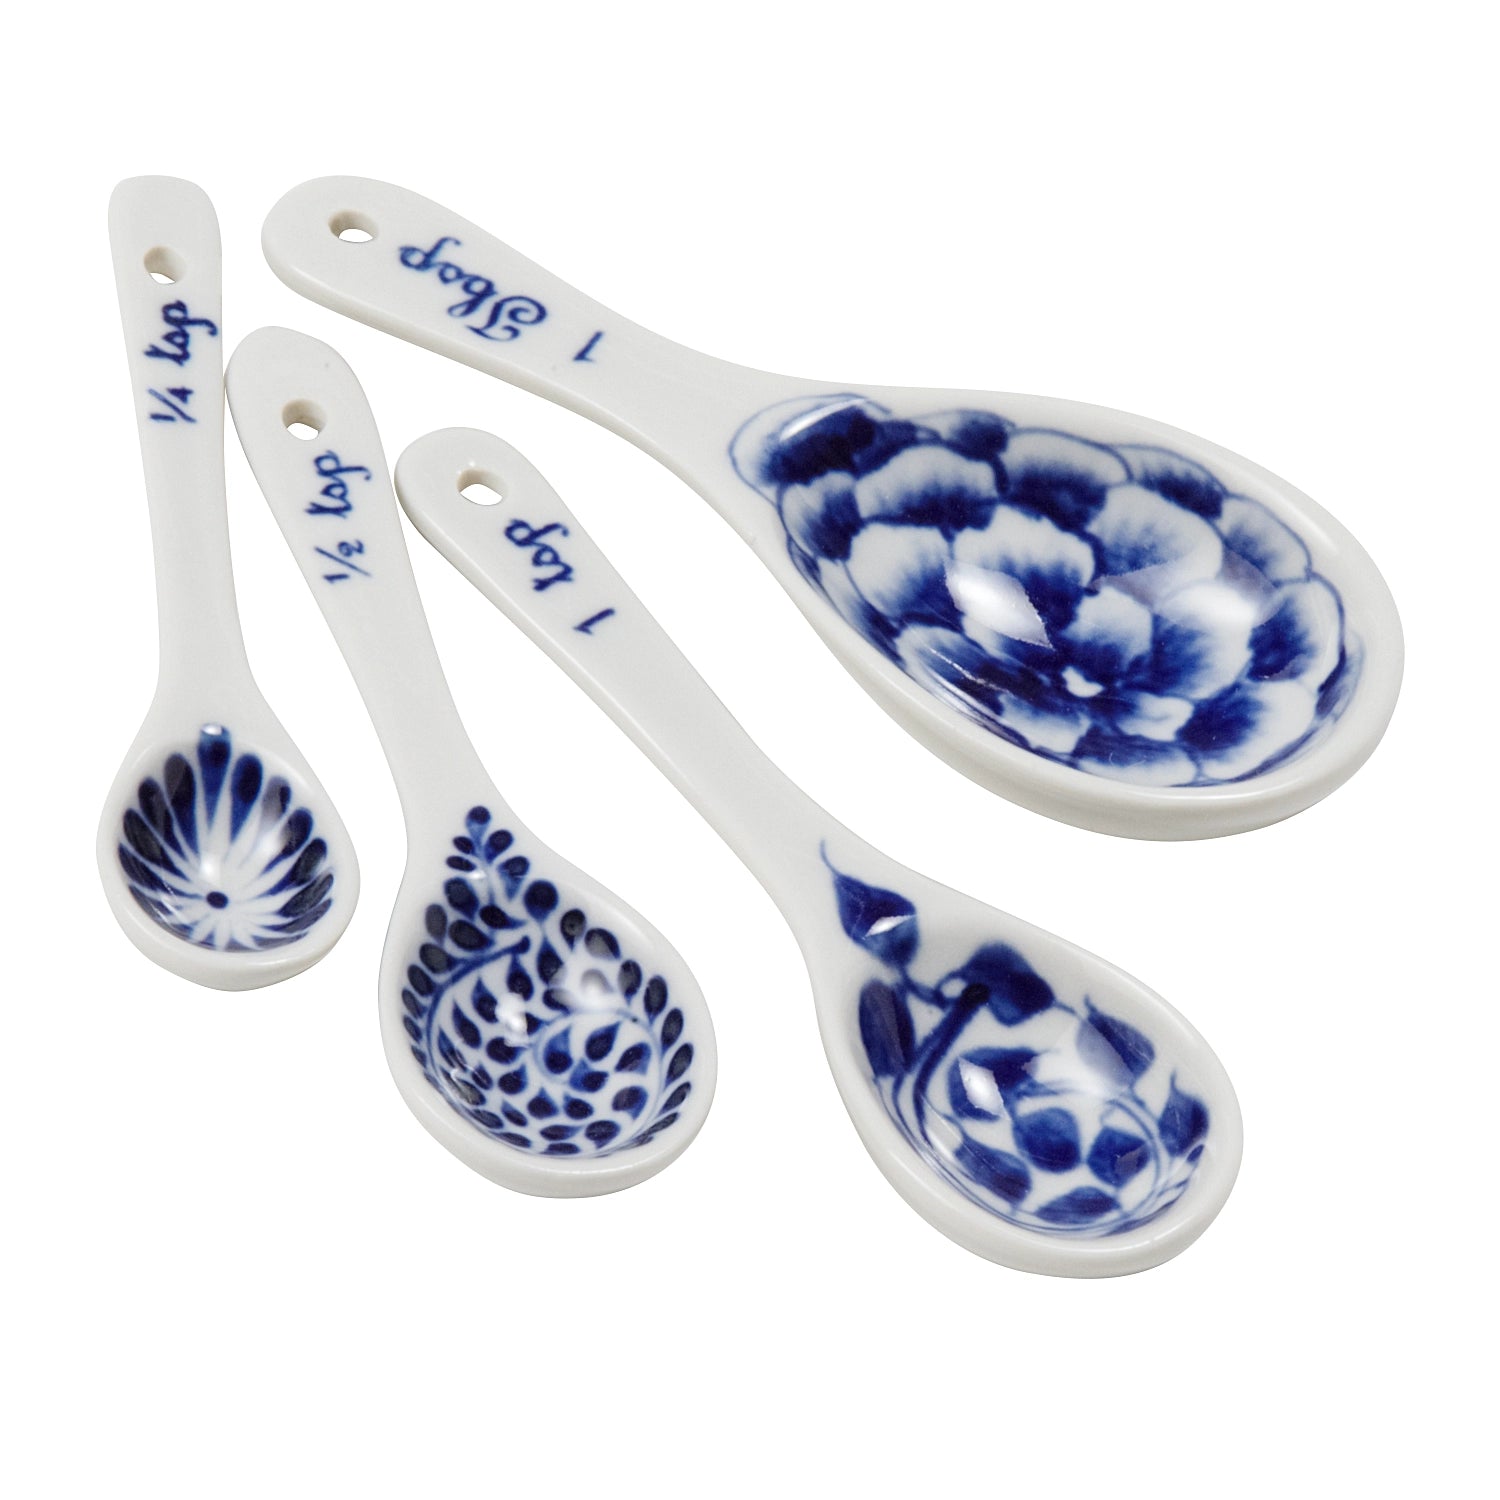 Blue & White Measuring Spoons